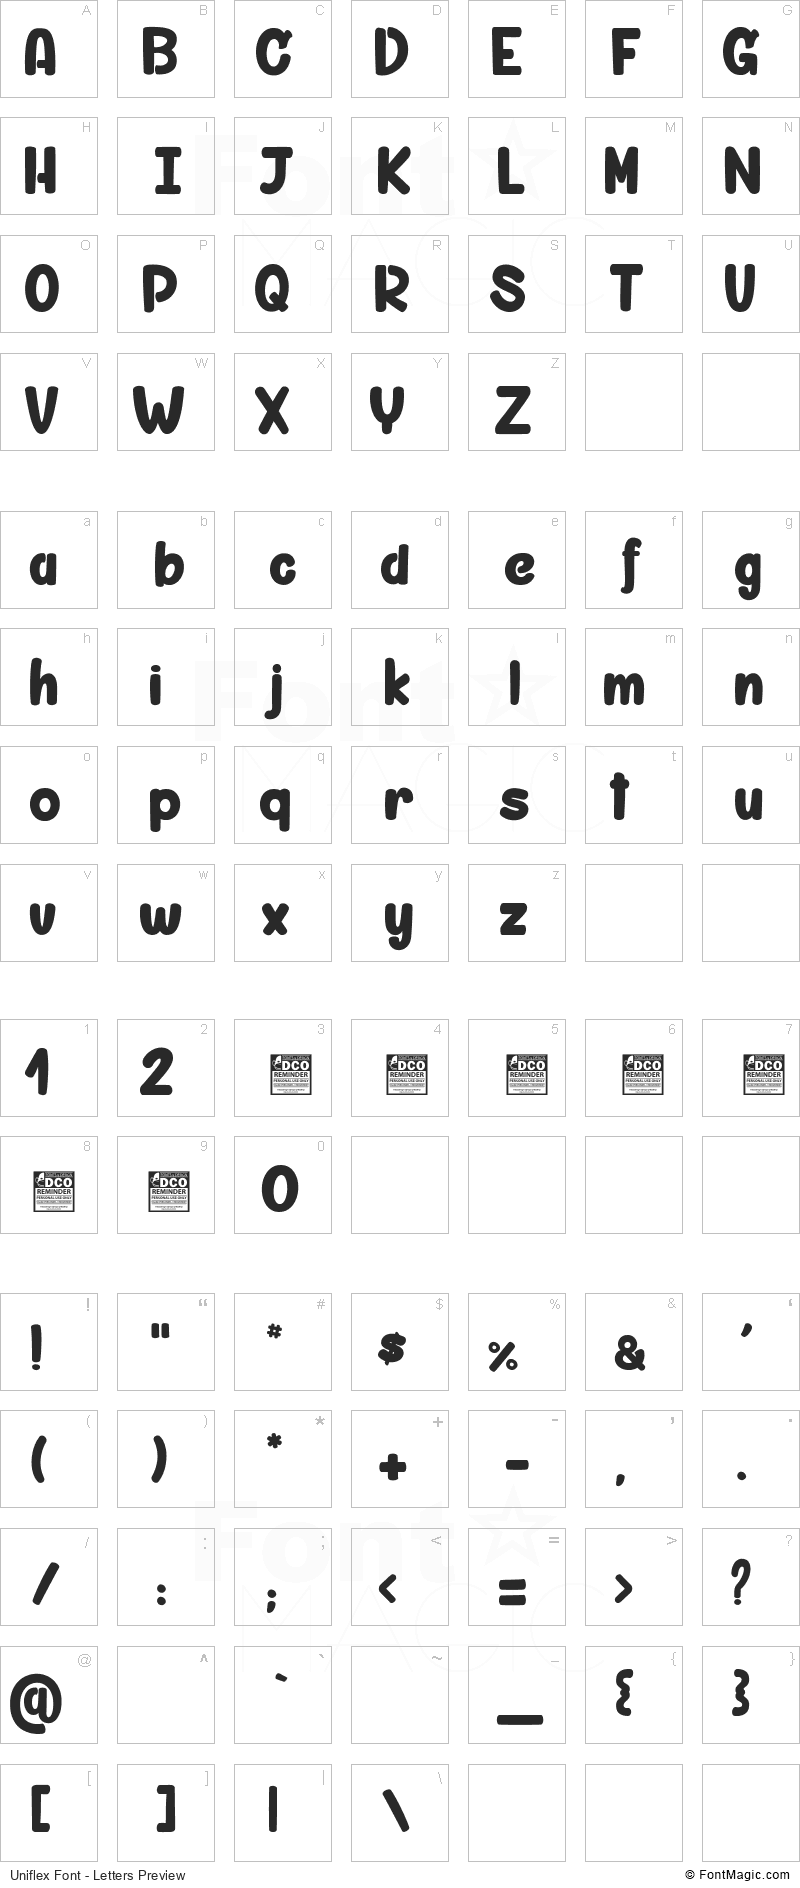 Uniflex Font - All Latters Preview Chart